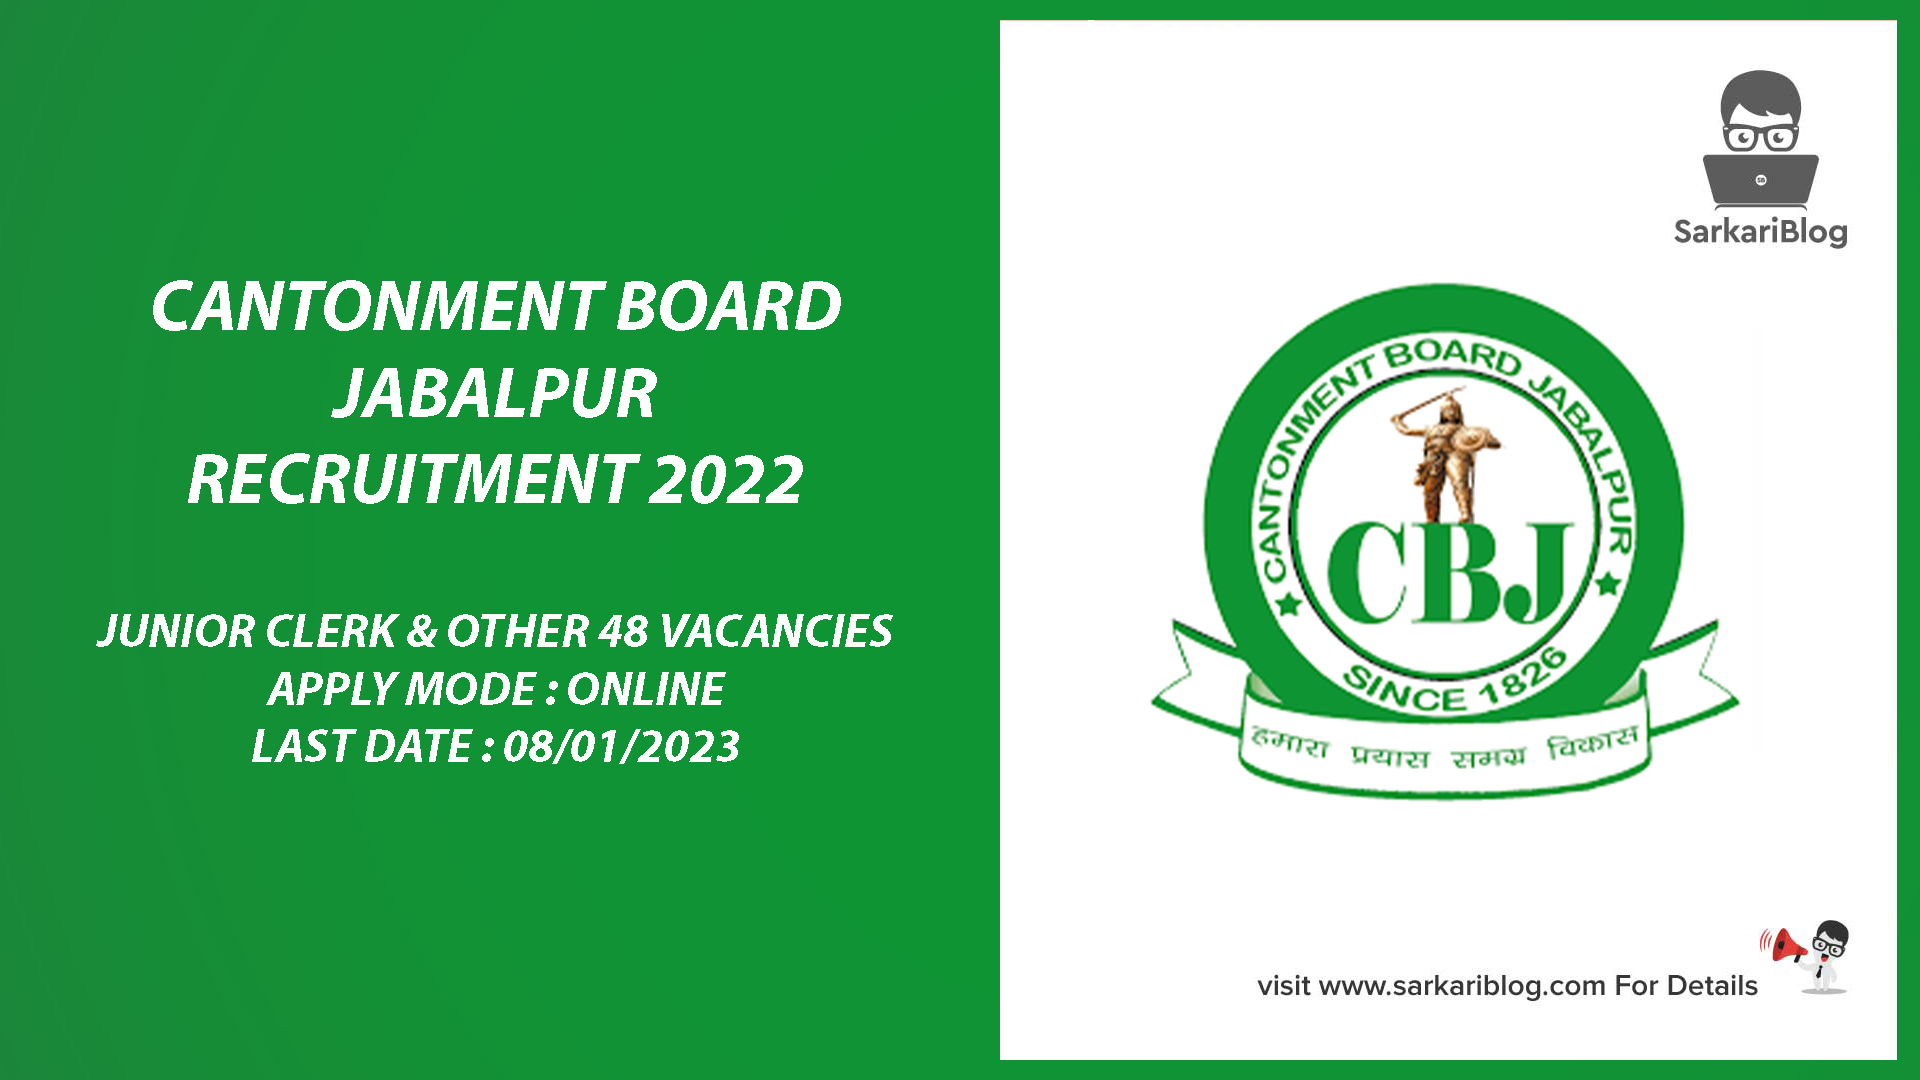 Cantonment Board Jabalpur Recruitment 2022